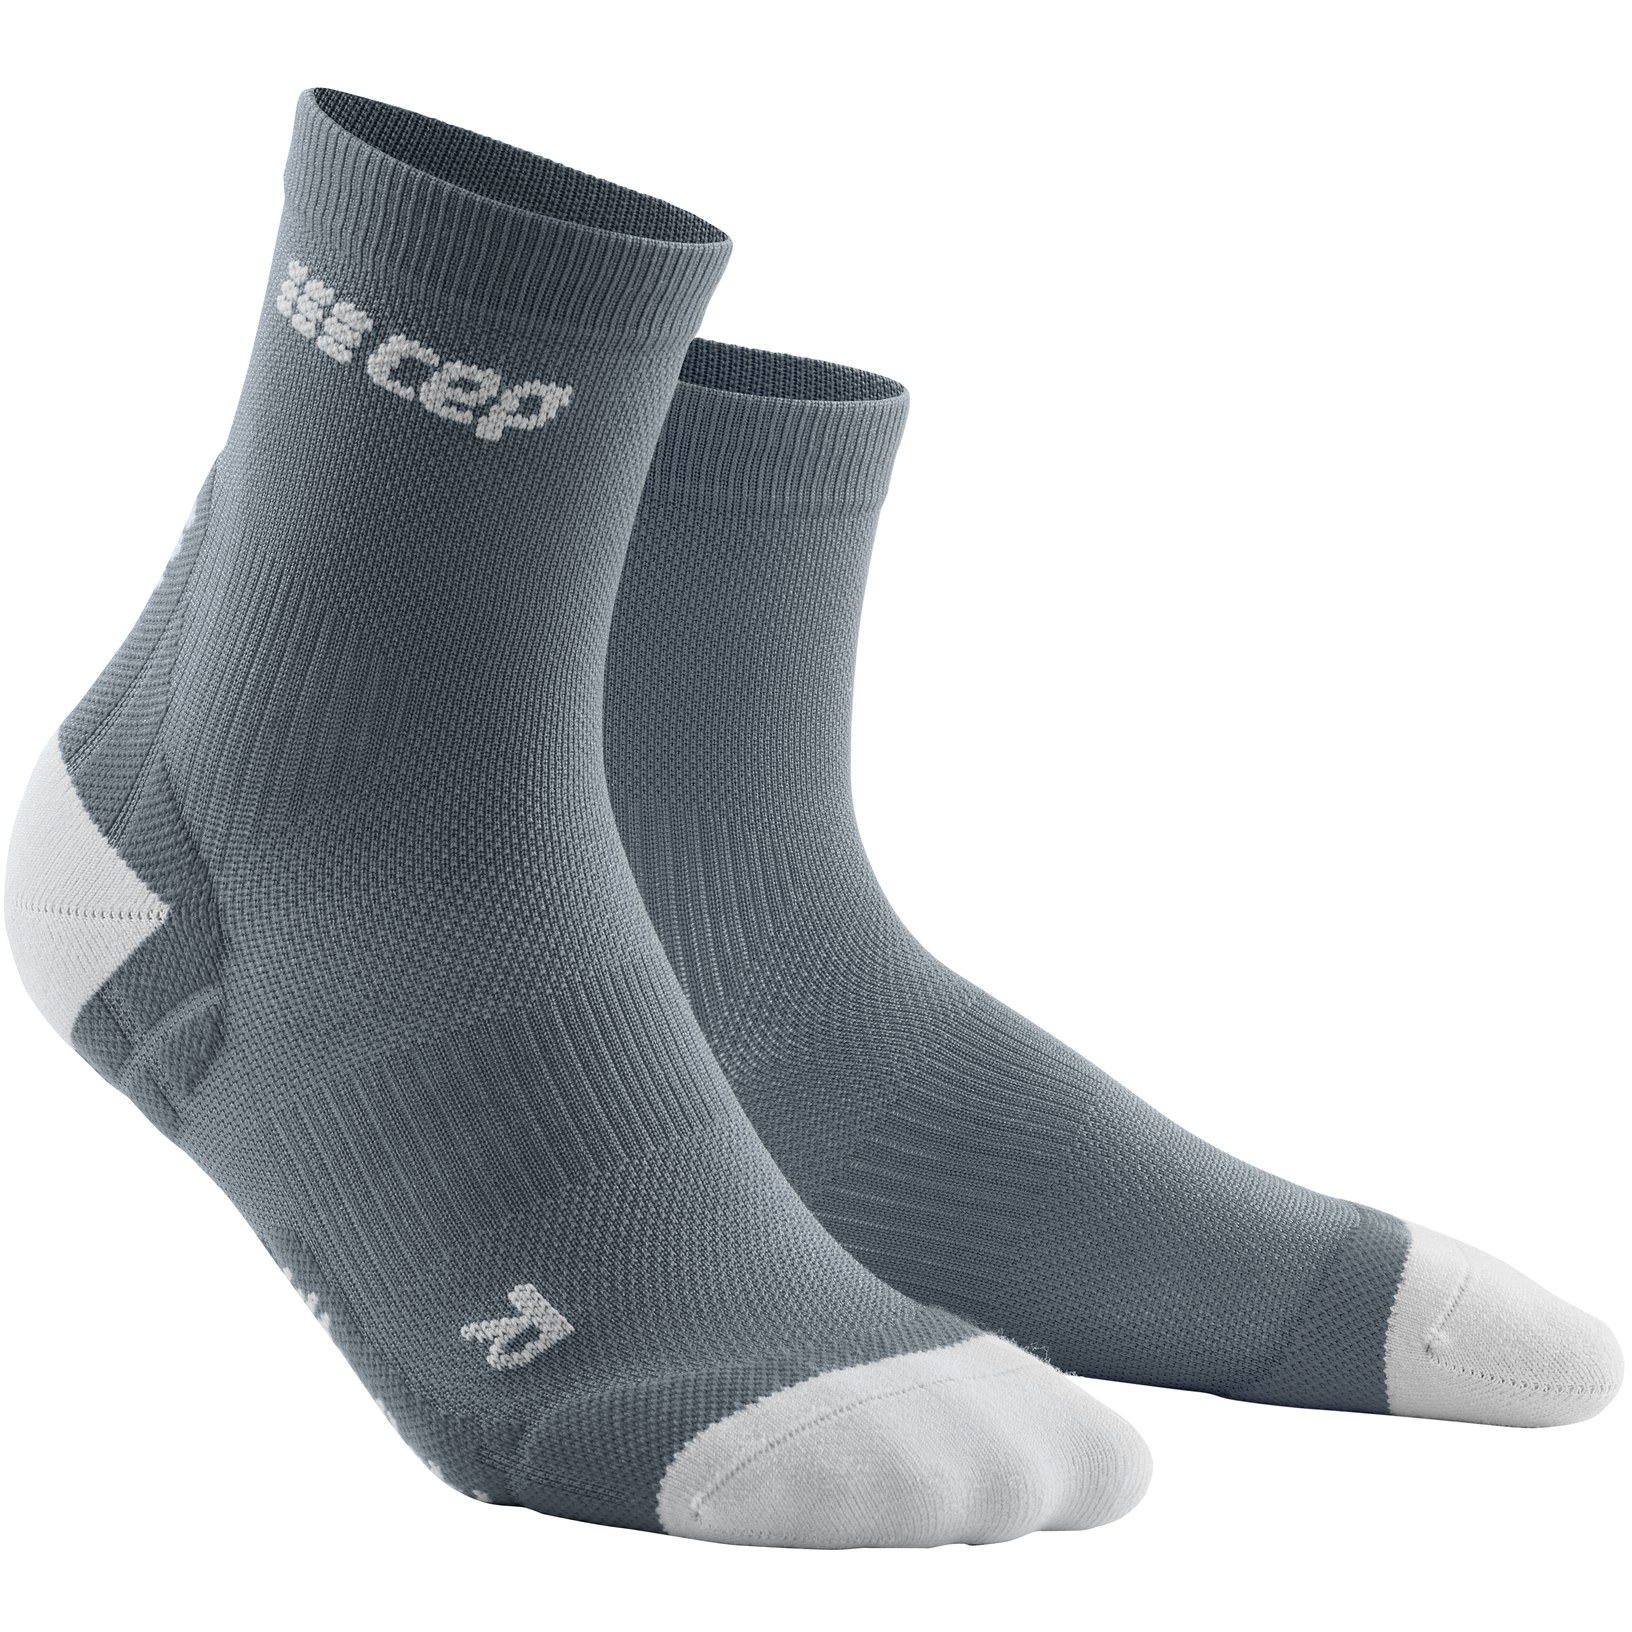 Picture of CEP Ultralight Short Compression Socks Women - grey/light grey